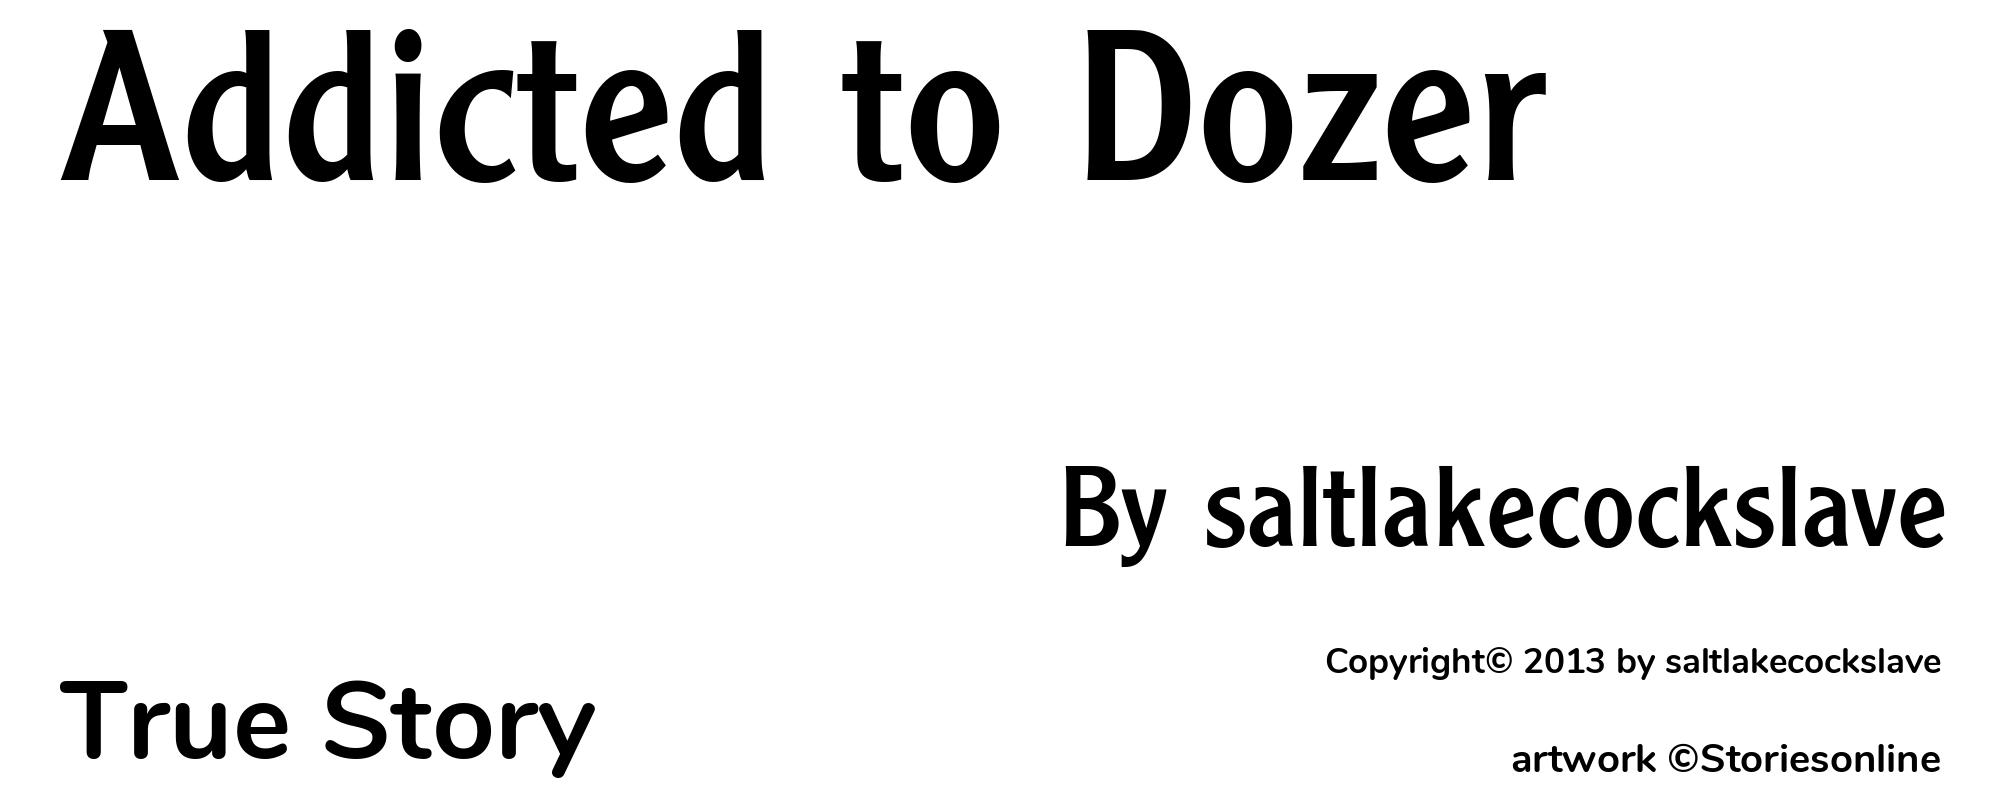 Addicted to Dozer - Cover